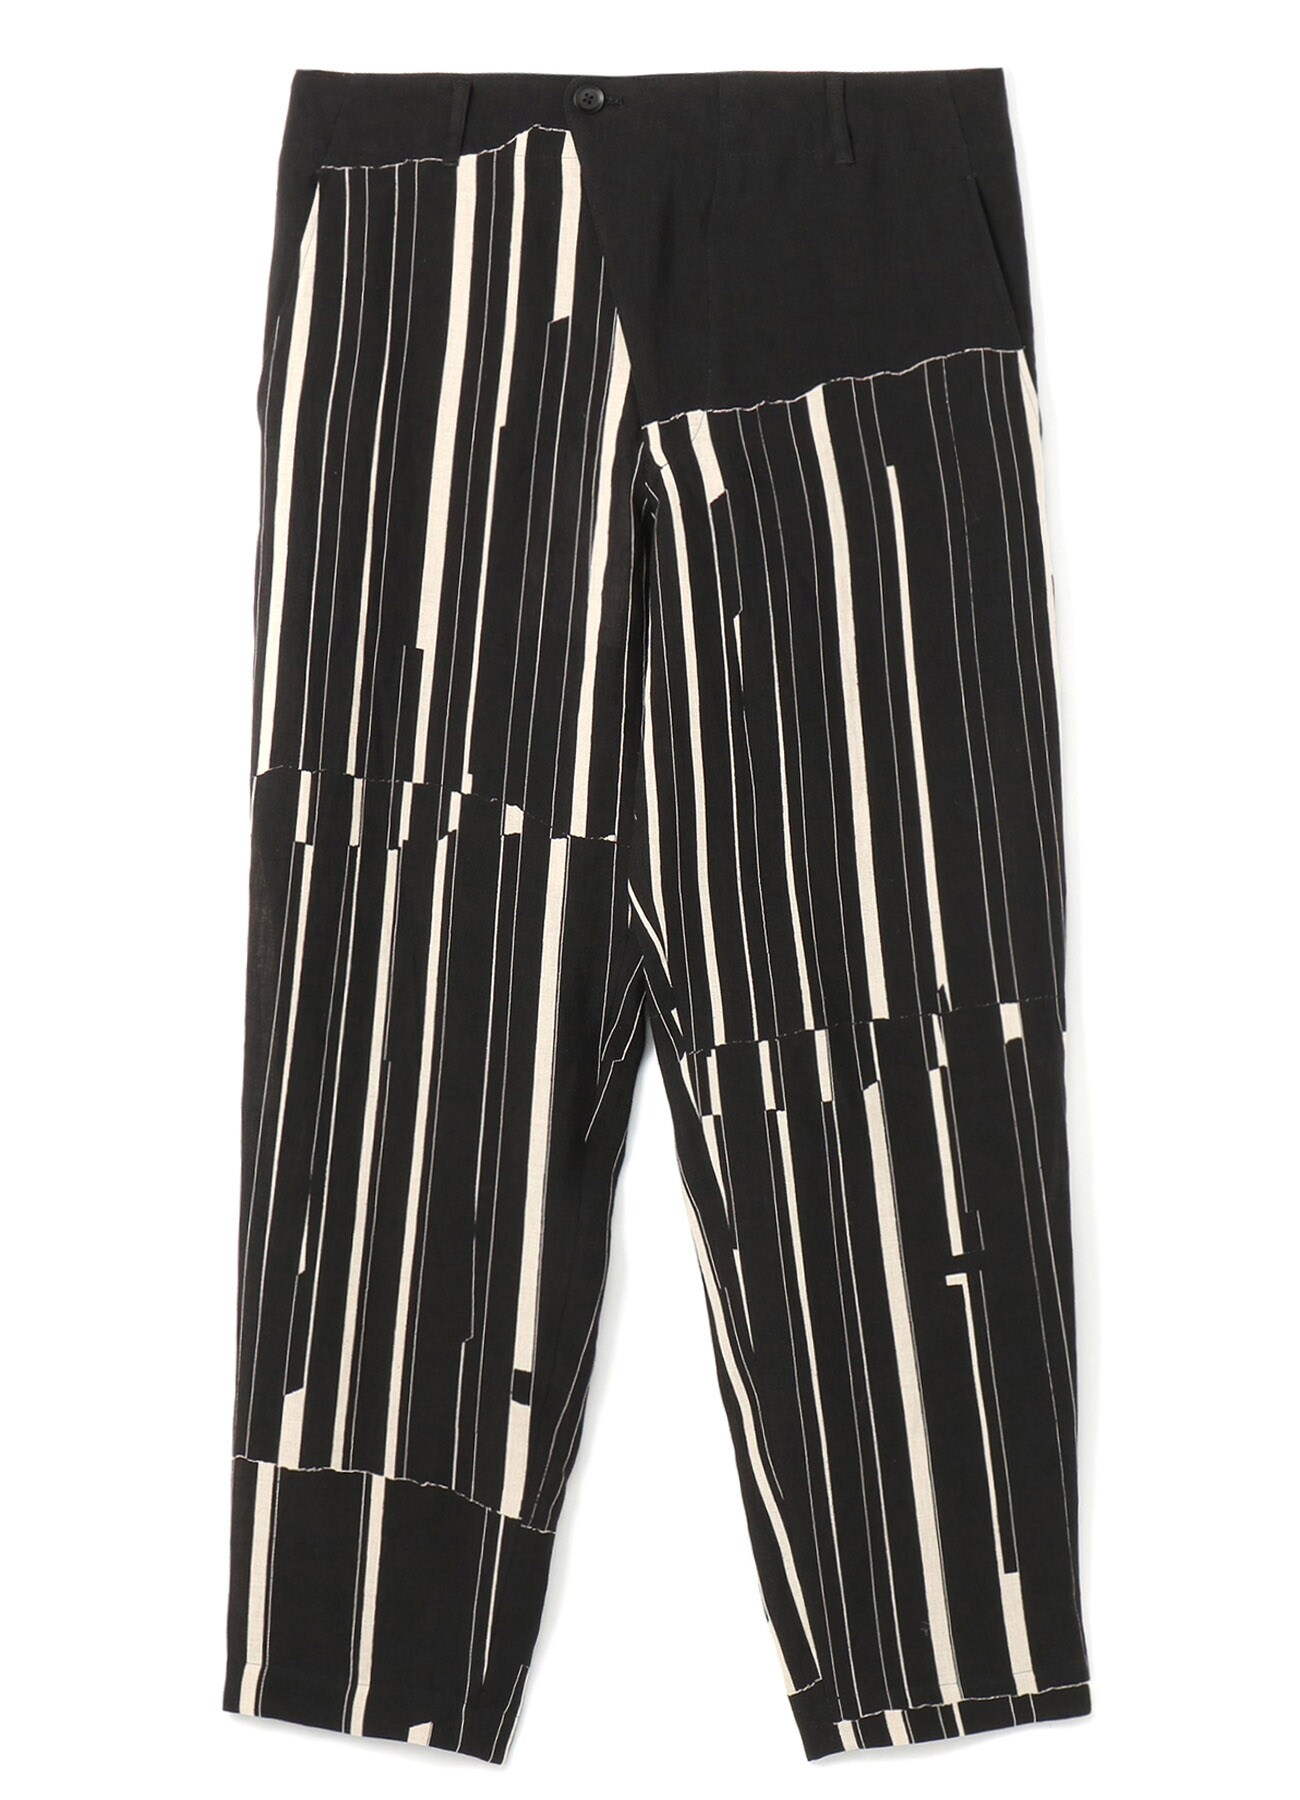 Li/Piano stripe Slim slacks